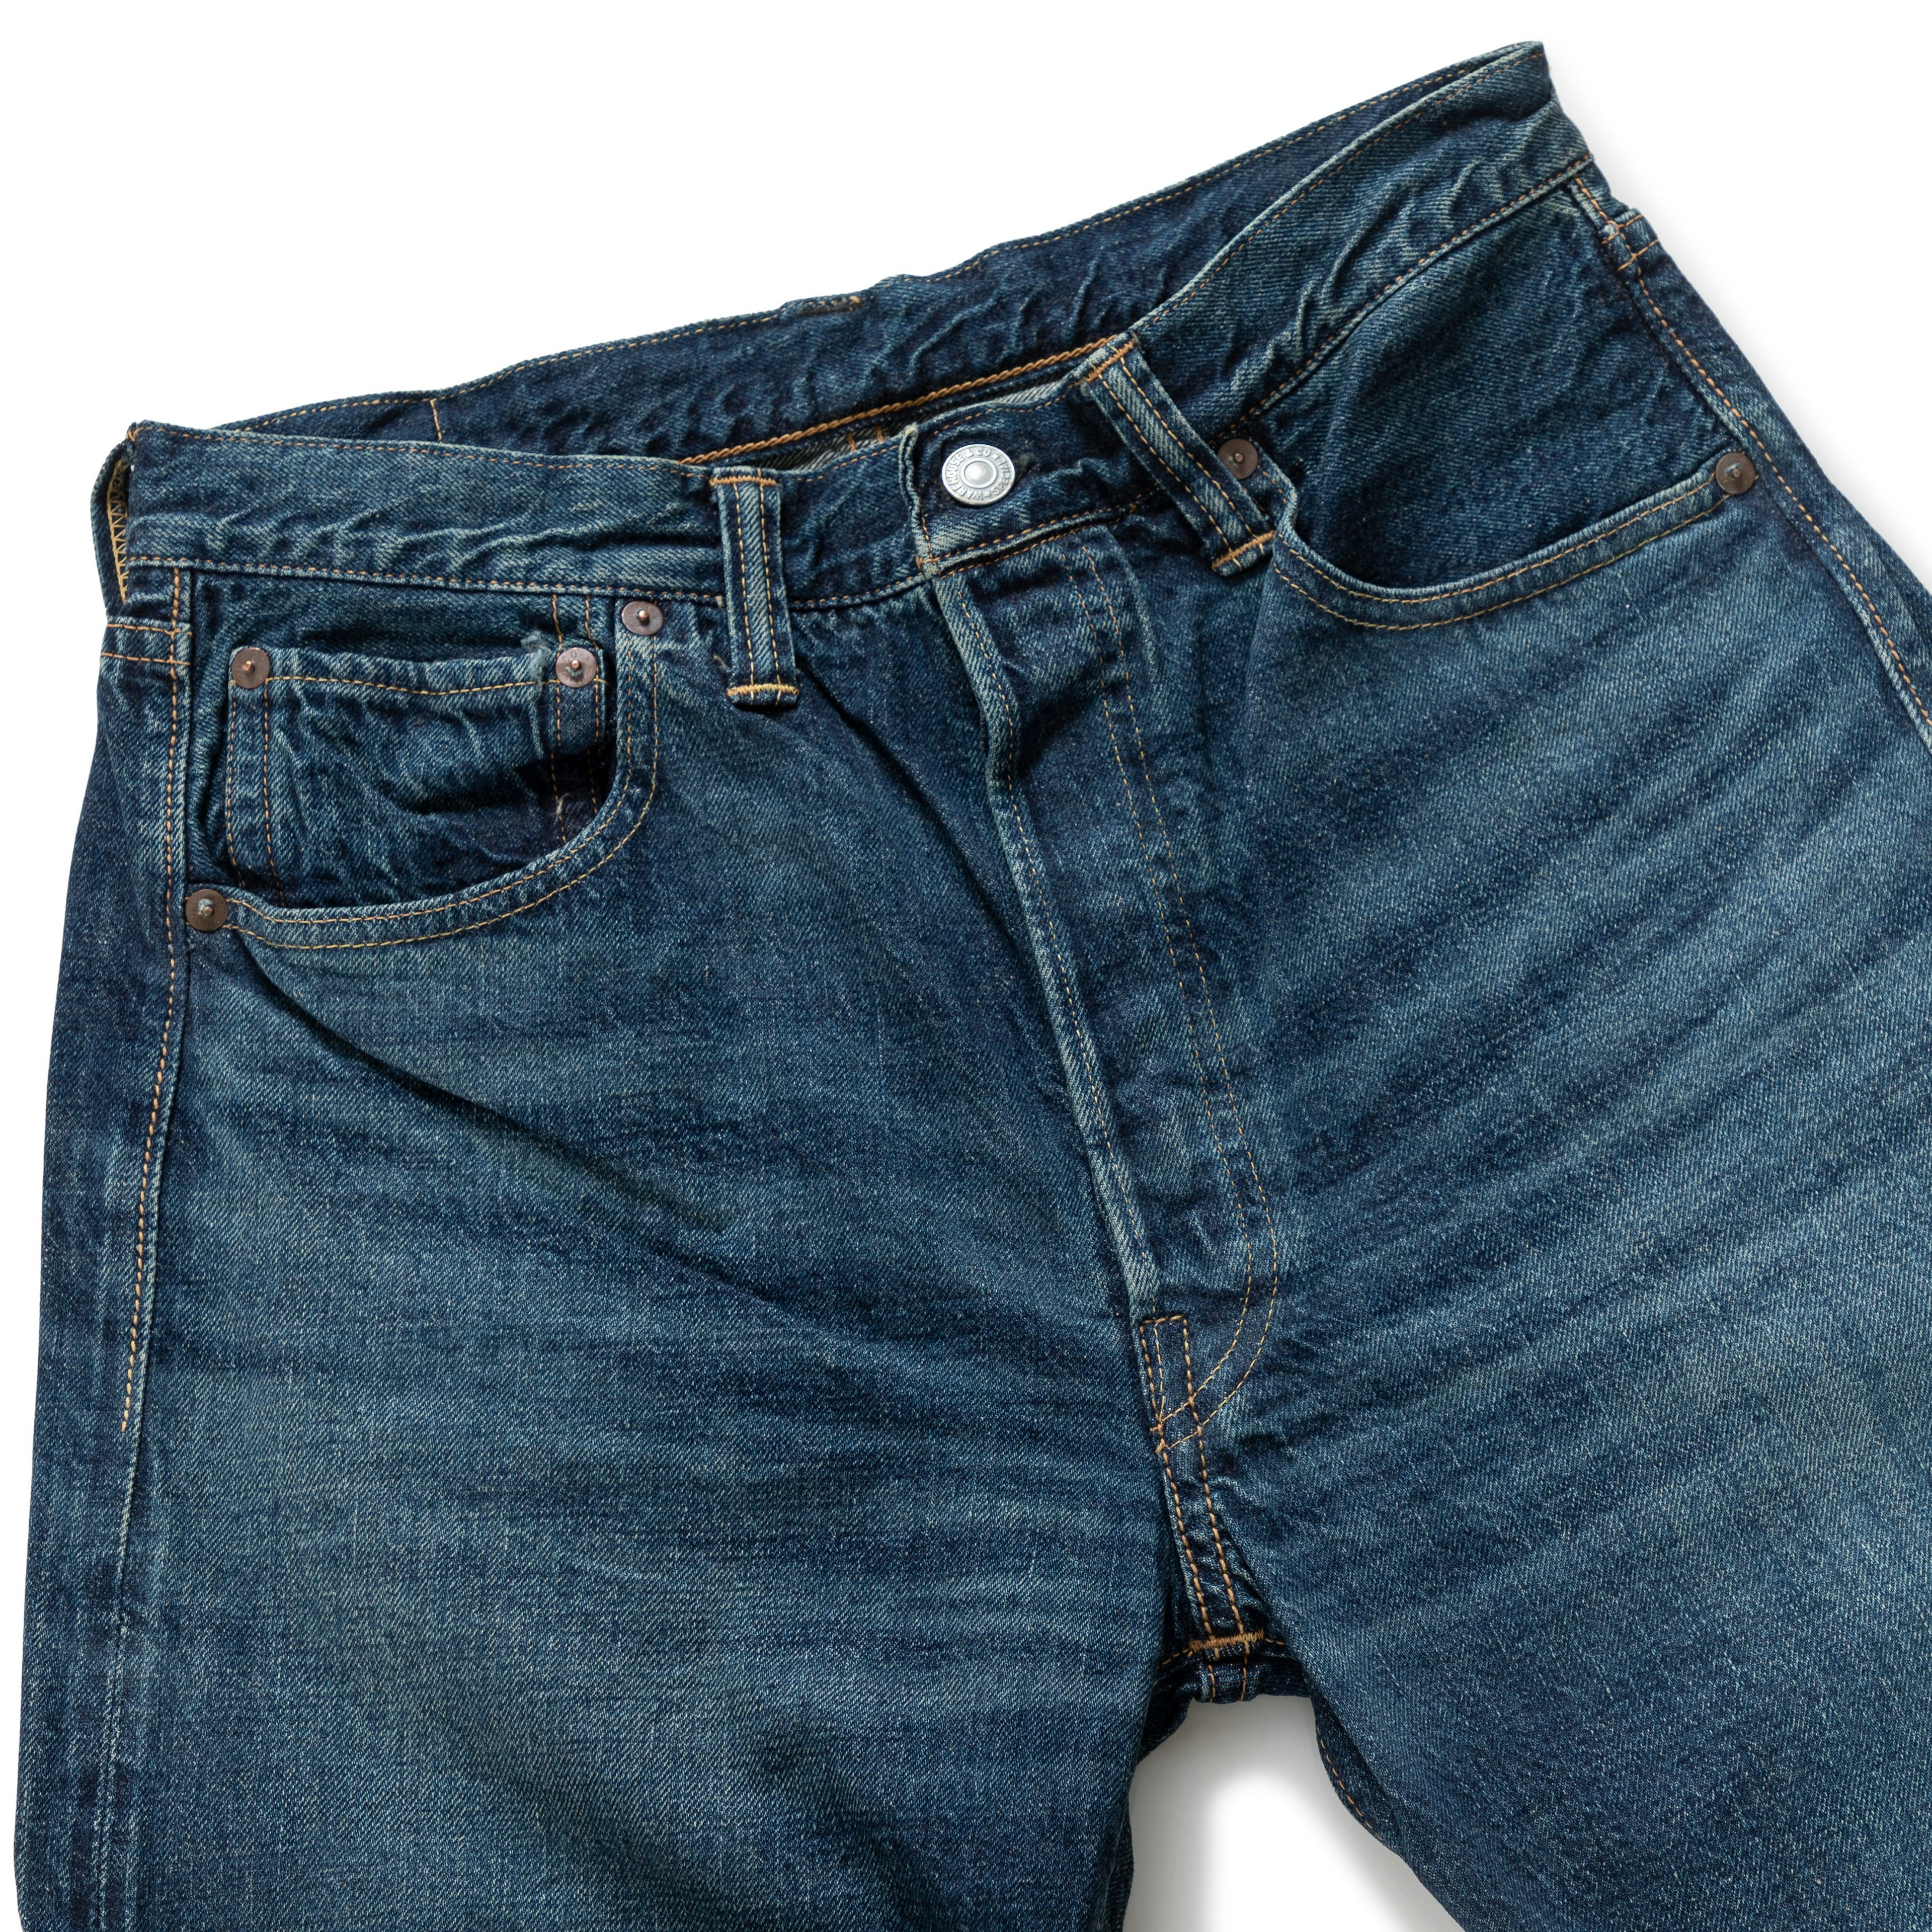 - Armoury Denim Jeans 5 The Pocket